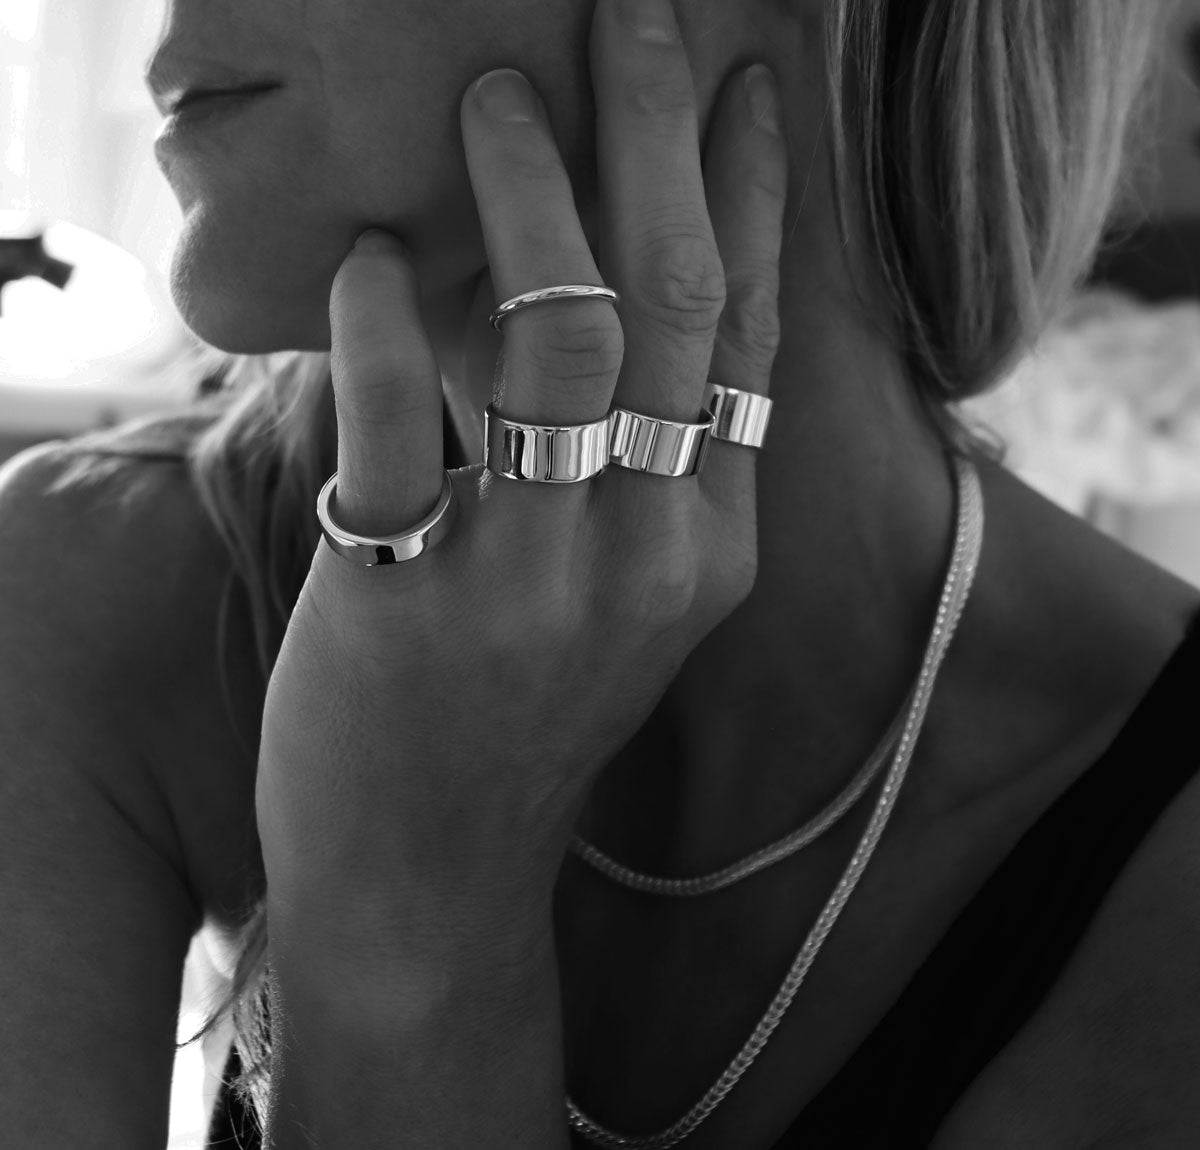 Buy Jewelgenics Stylish Silver Ring Designer Delicate Rings For Boys &  Girls 2(Pcs) at Amazon.in